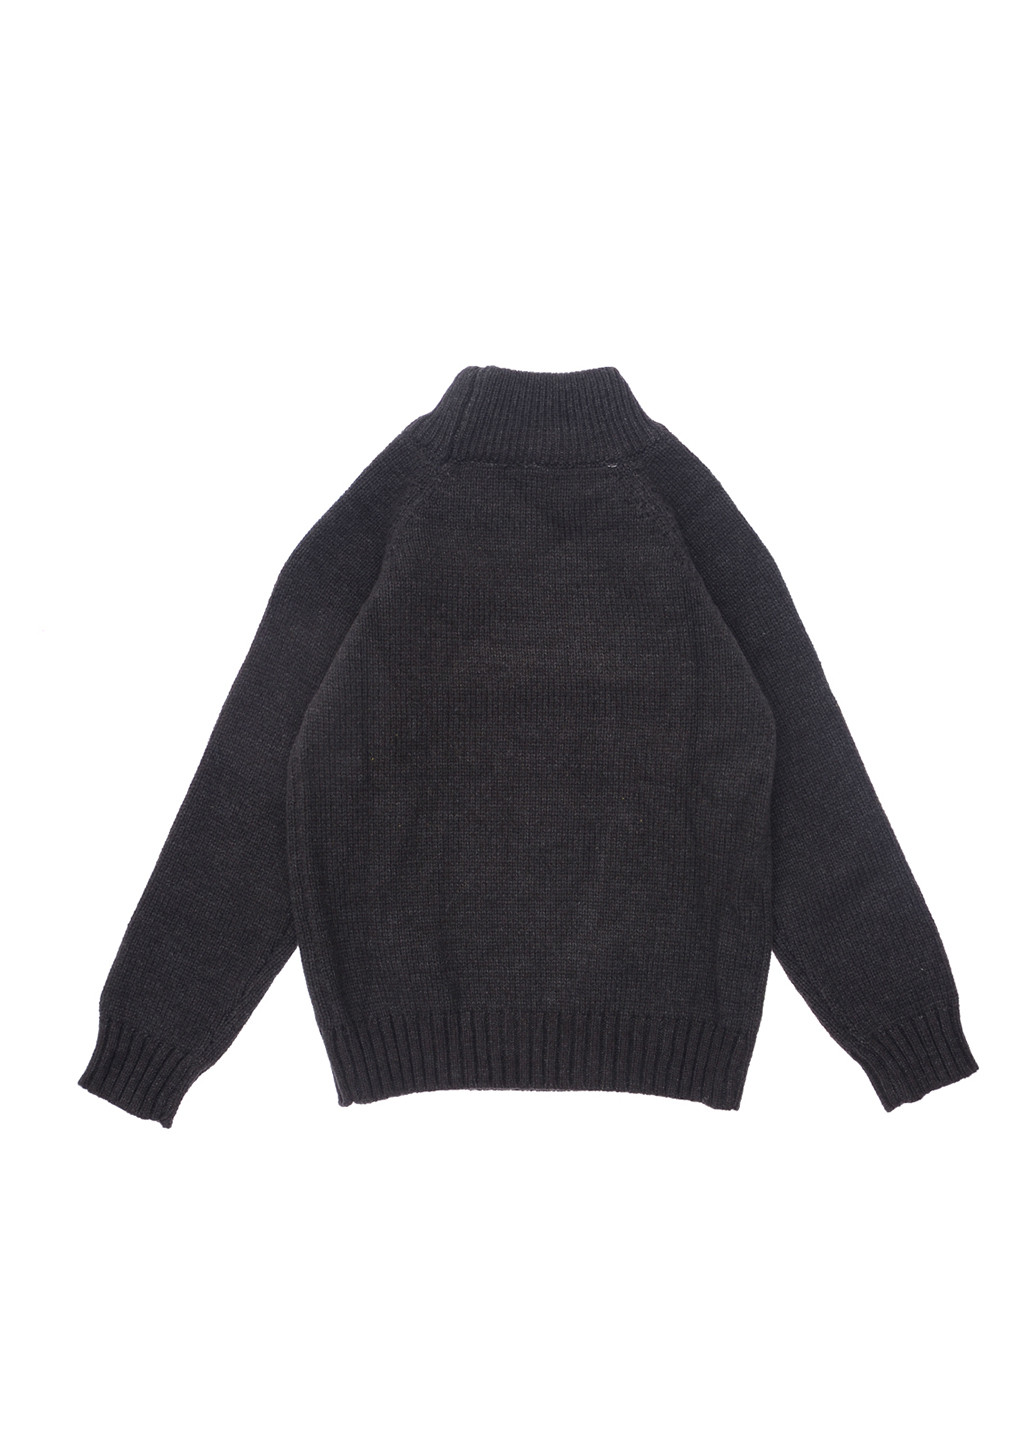 Черный демисезонный свитер джемпер Pinetti